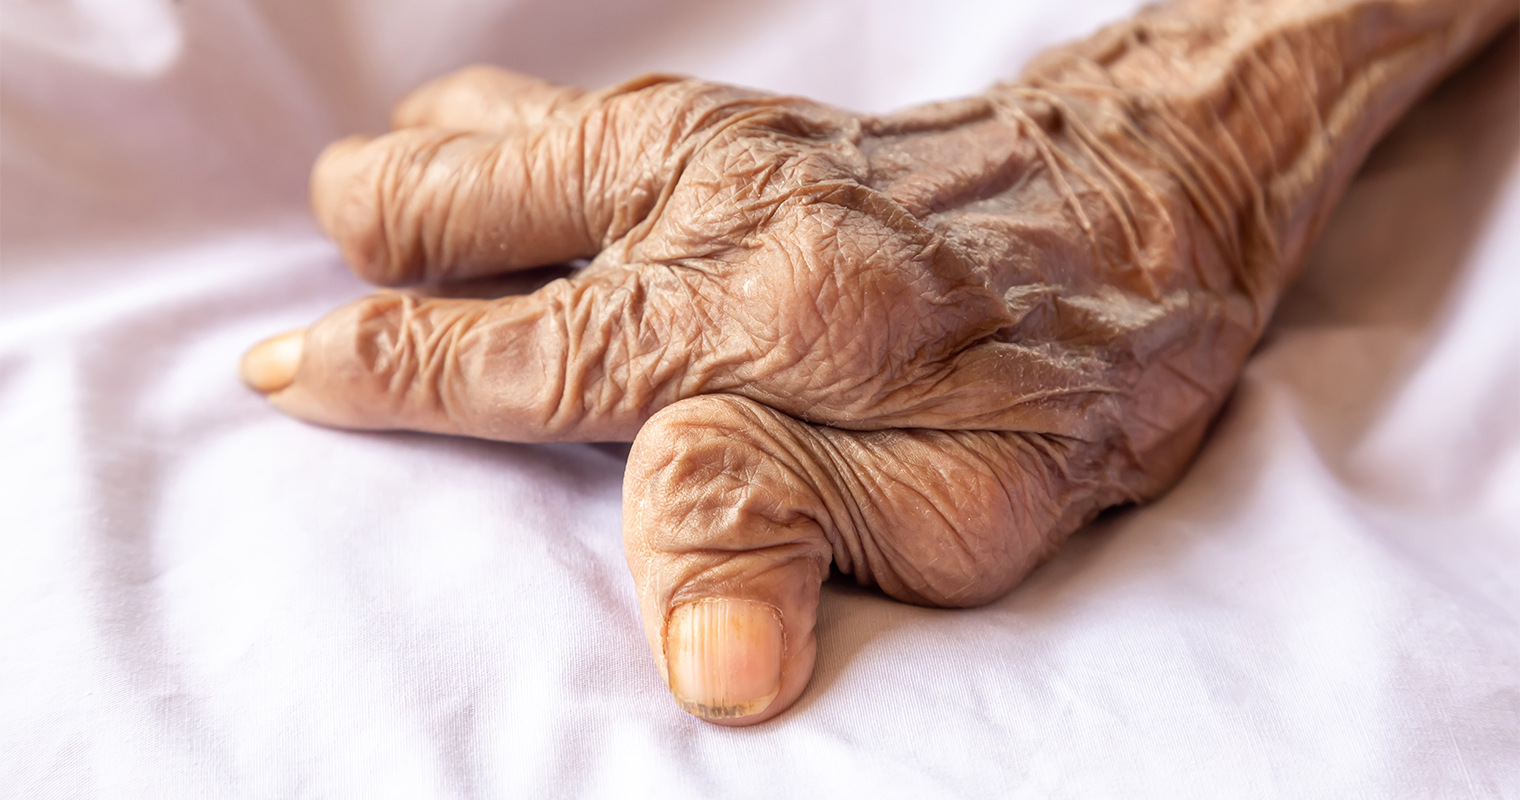 fingers of woman with rheumatoid arthritis